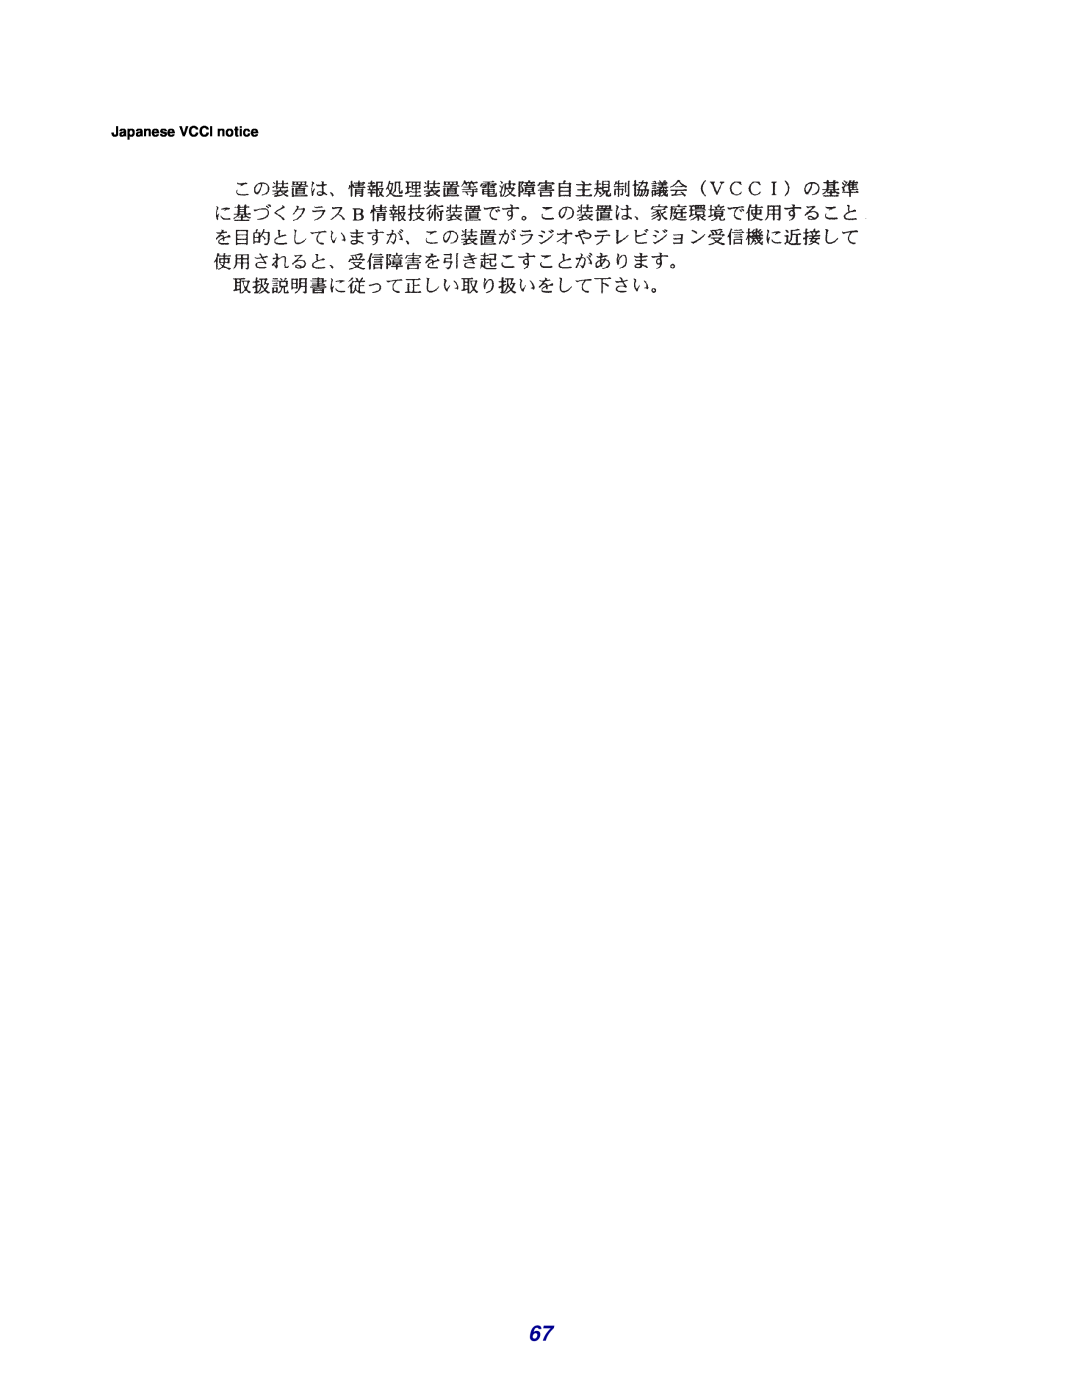 Lexmark Z600 Series manual Japanese VCCI notice 